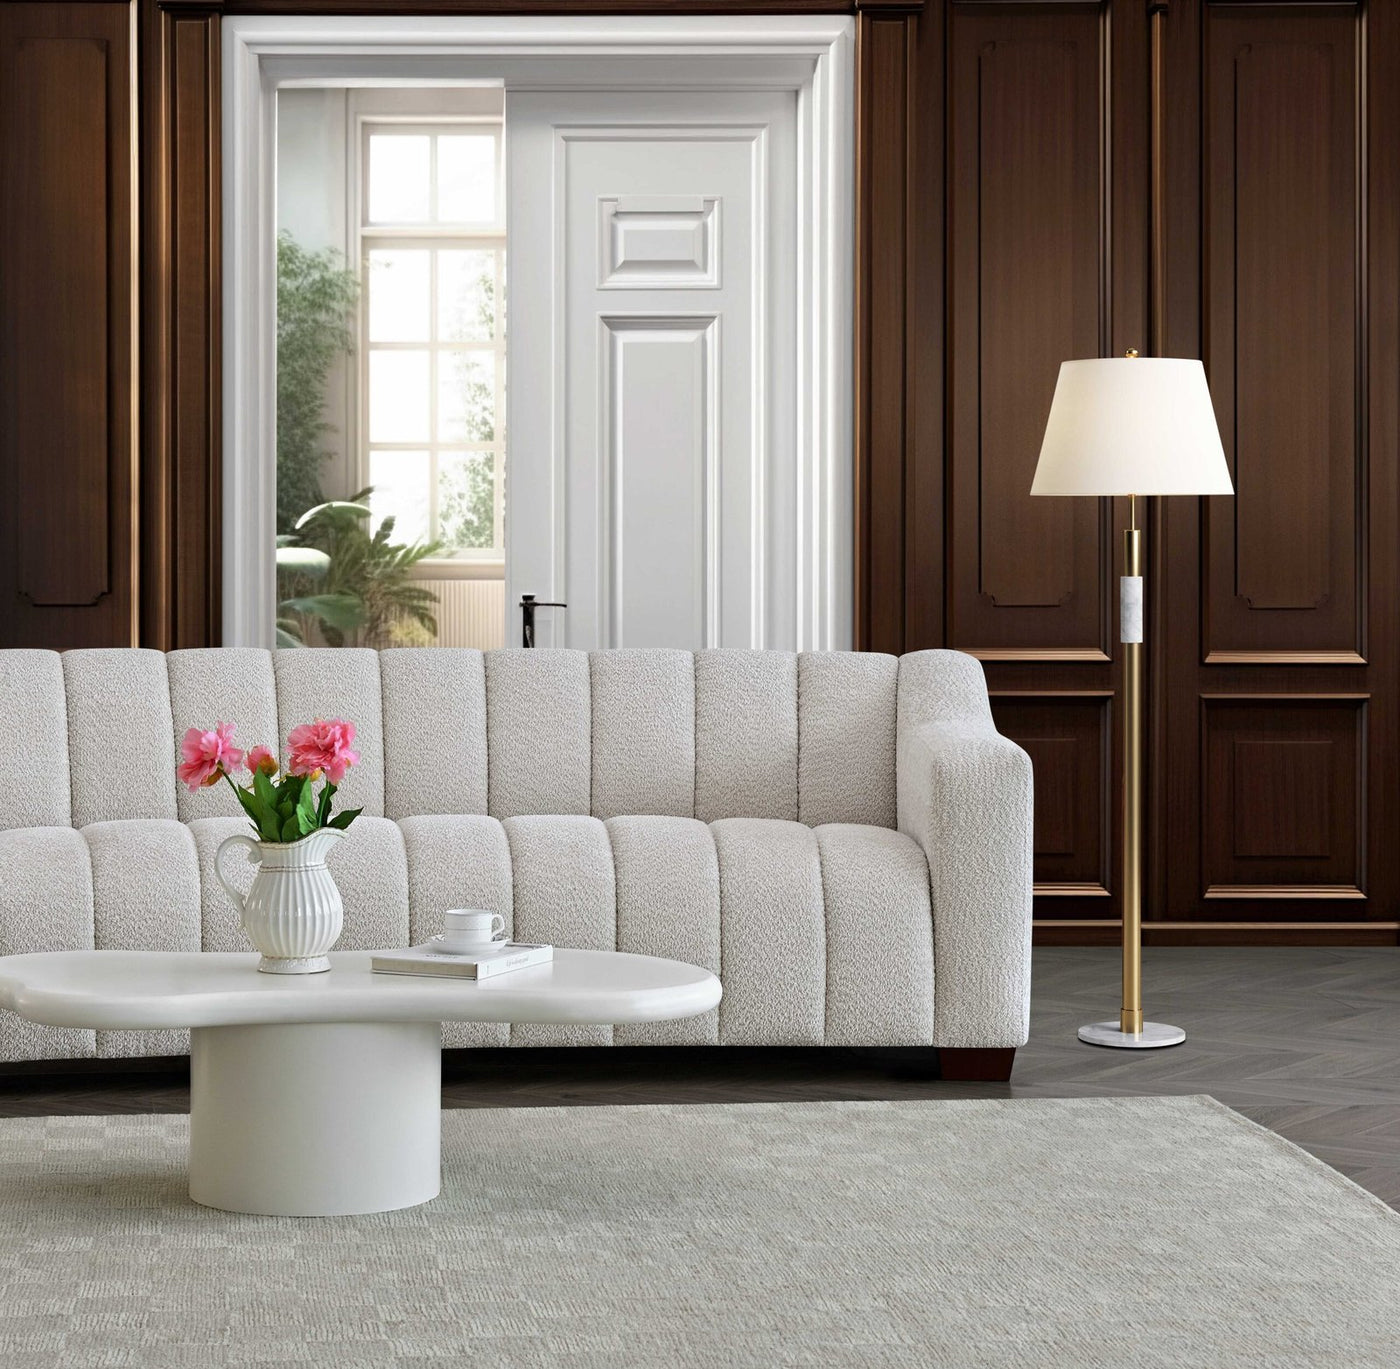 Aluxo Astoria 3 Seater Sofa in Oatmeal - Grab Some Furniture